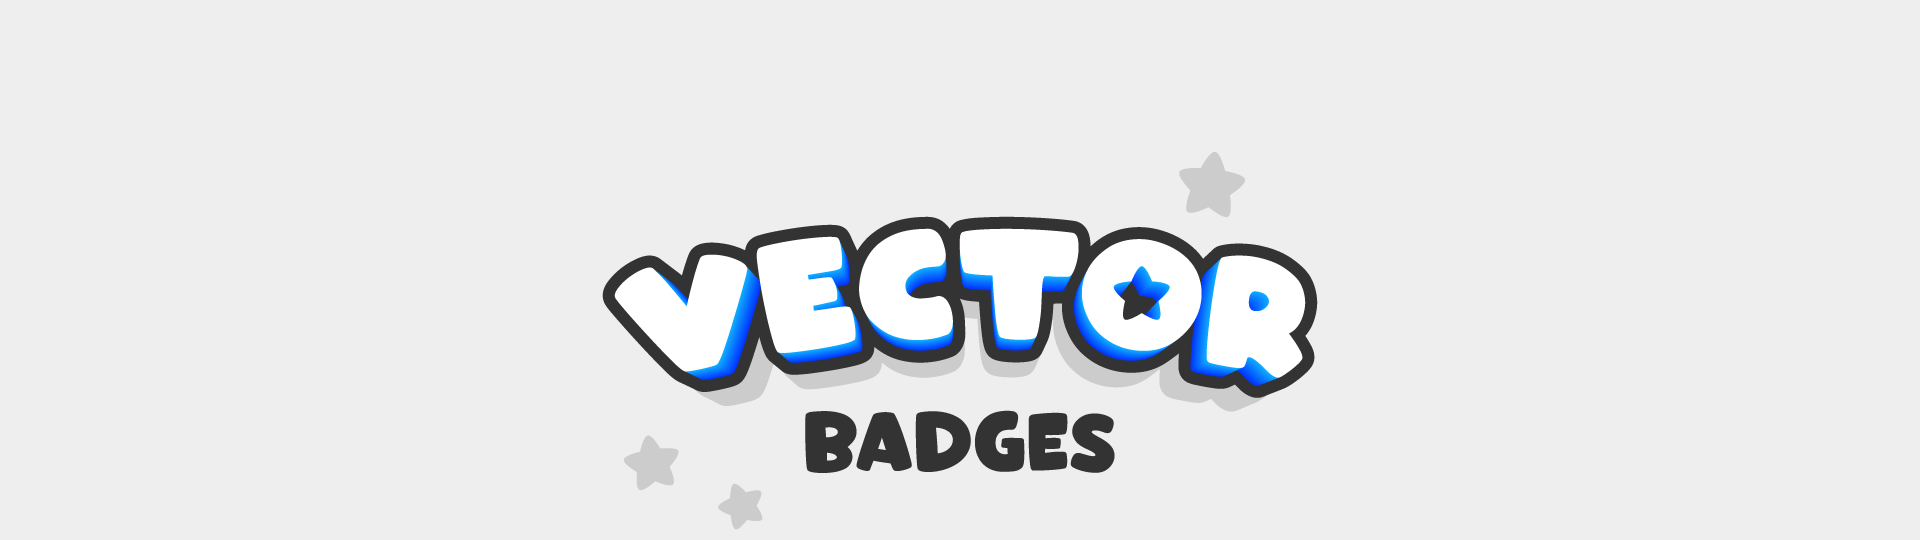 Vector Badges